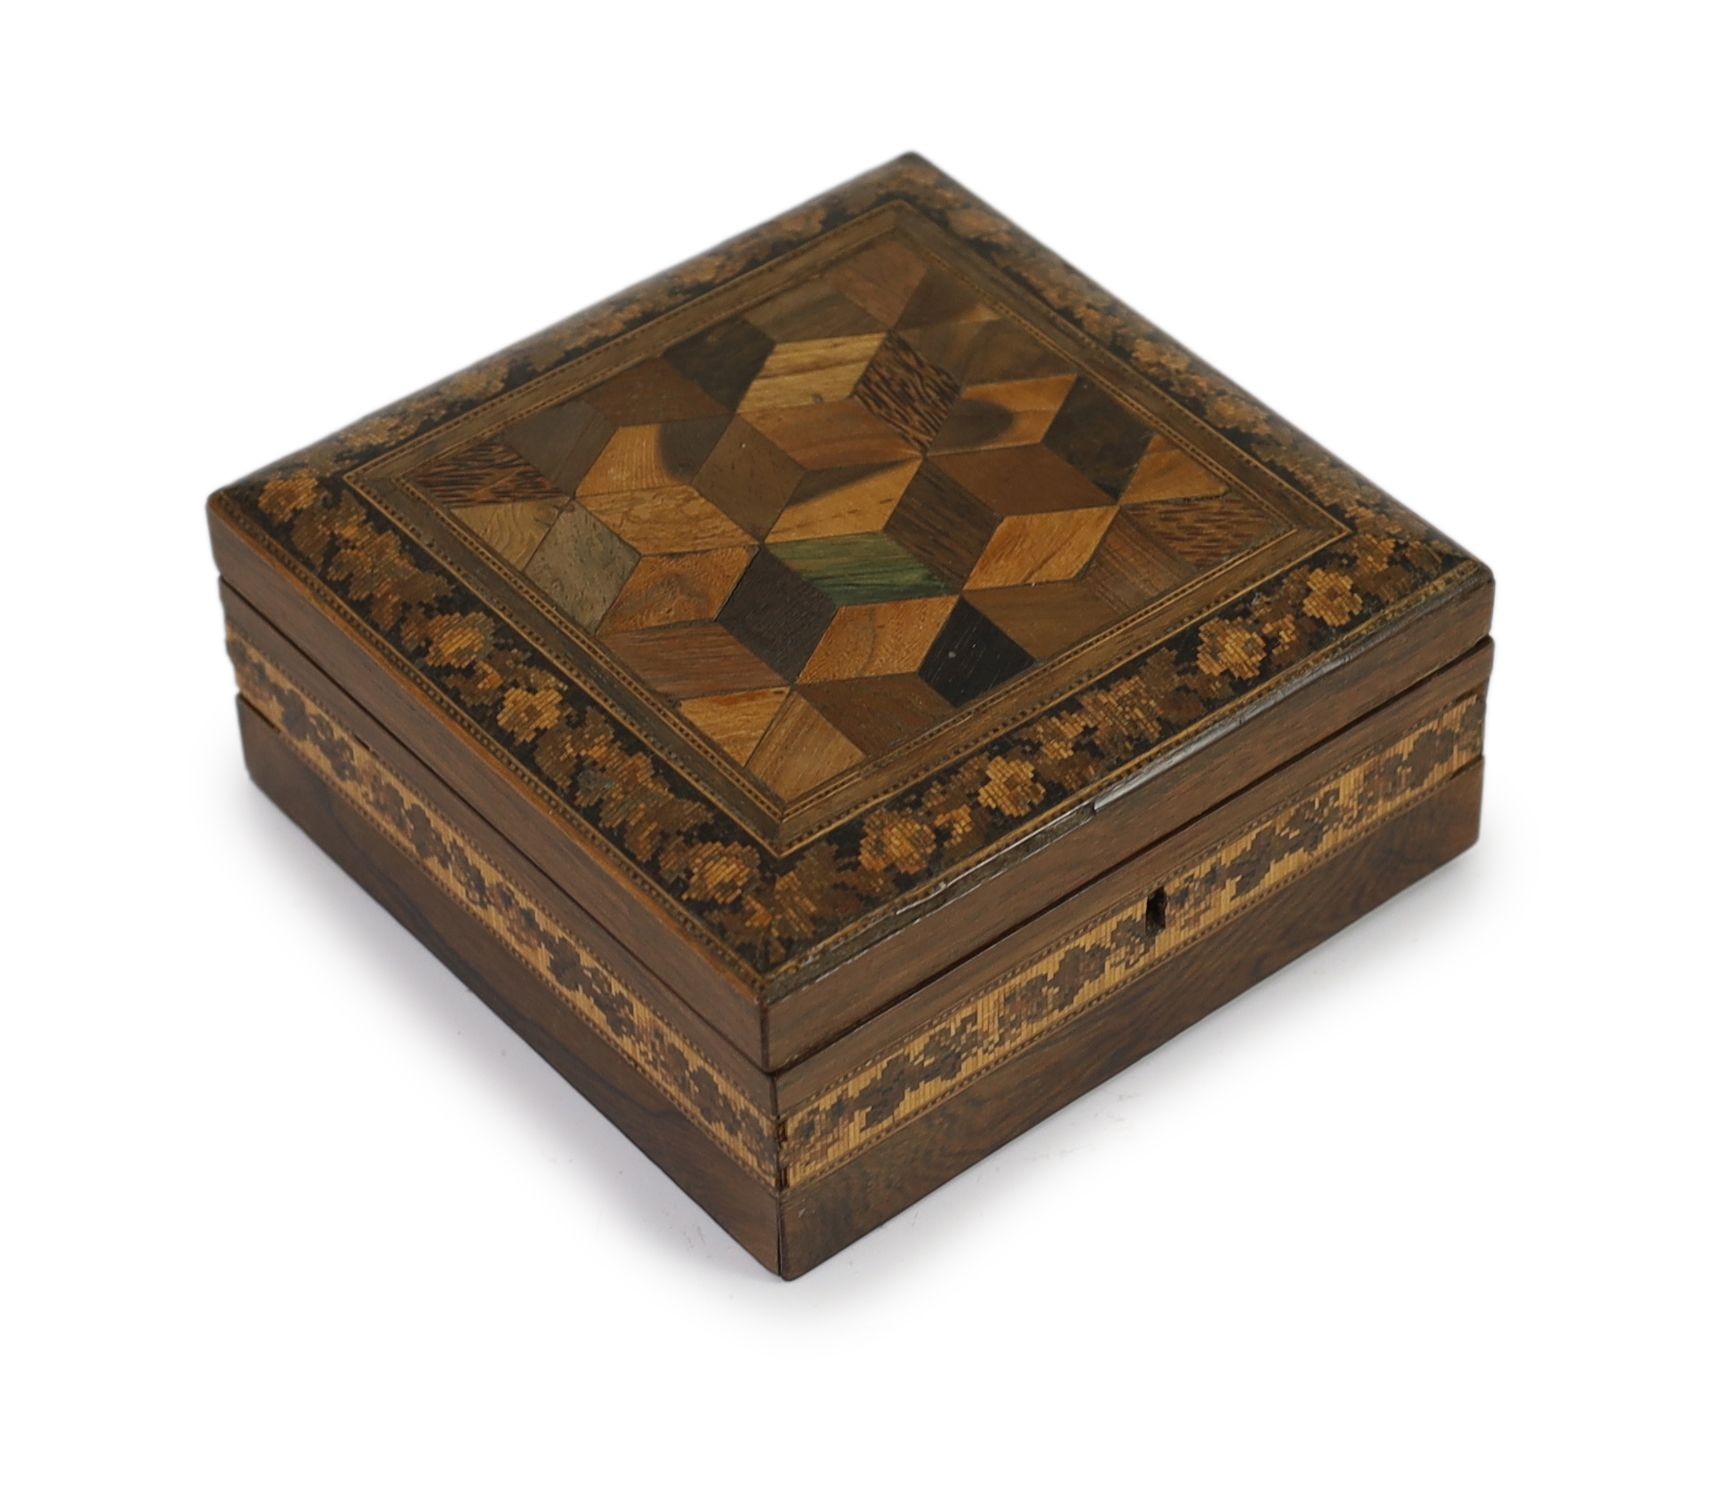 A 19th century rosewood and Tunbridgeware box, 15.5cm